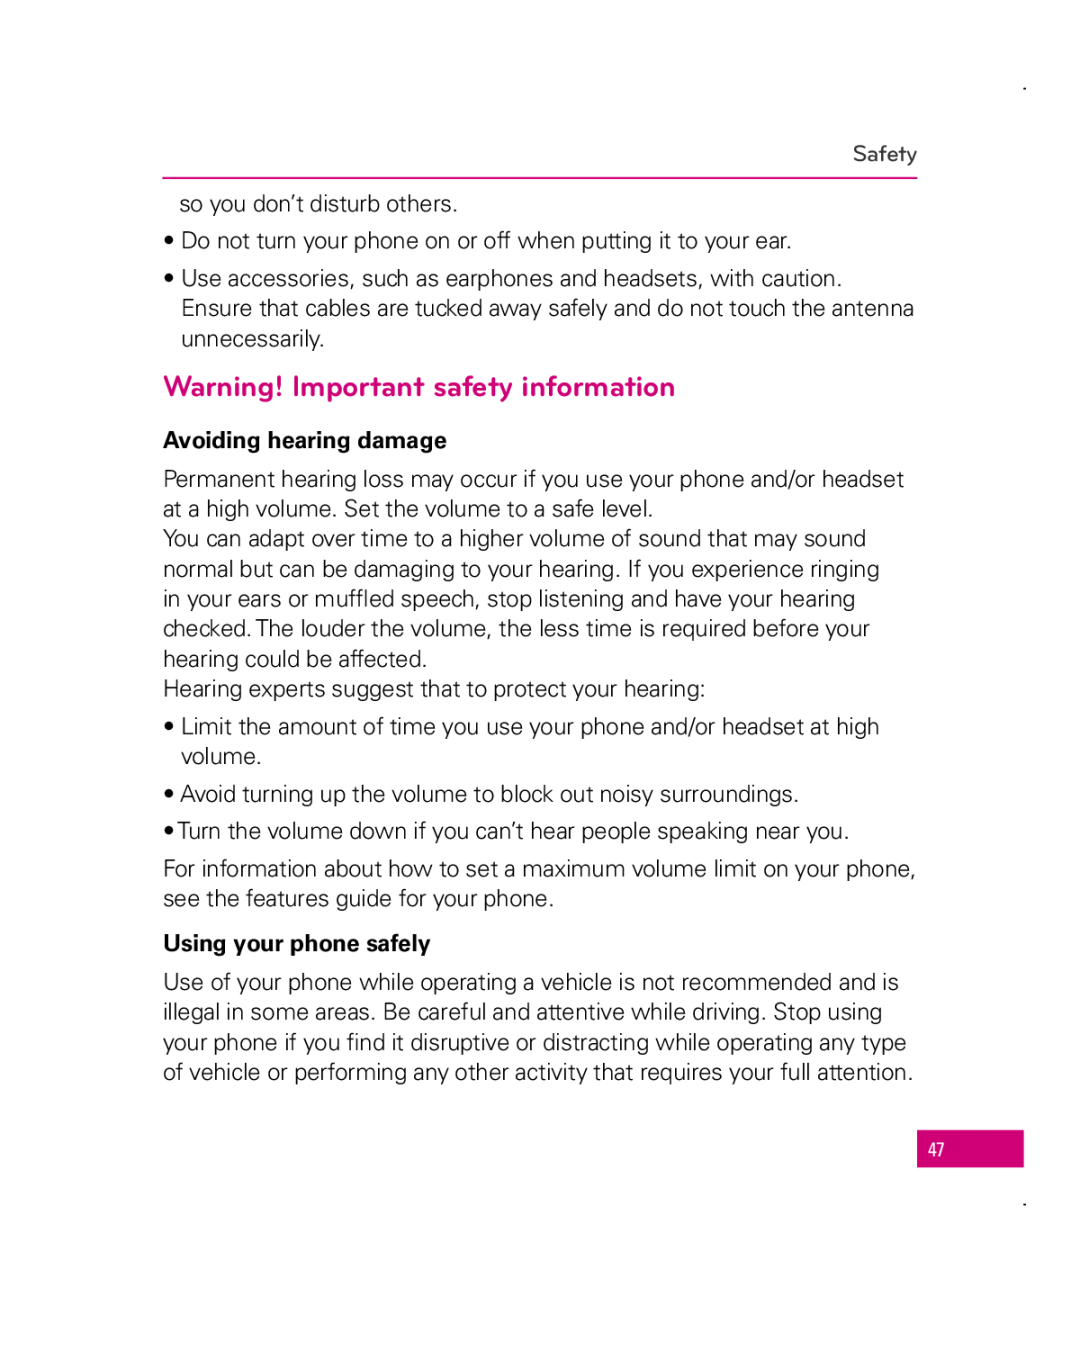 LG Electronics Apex manual Warning! Important safety information, Avoiding hearing damage, Using your phone safely, Safety 